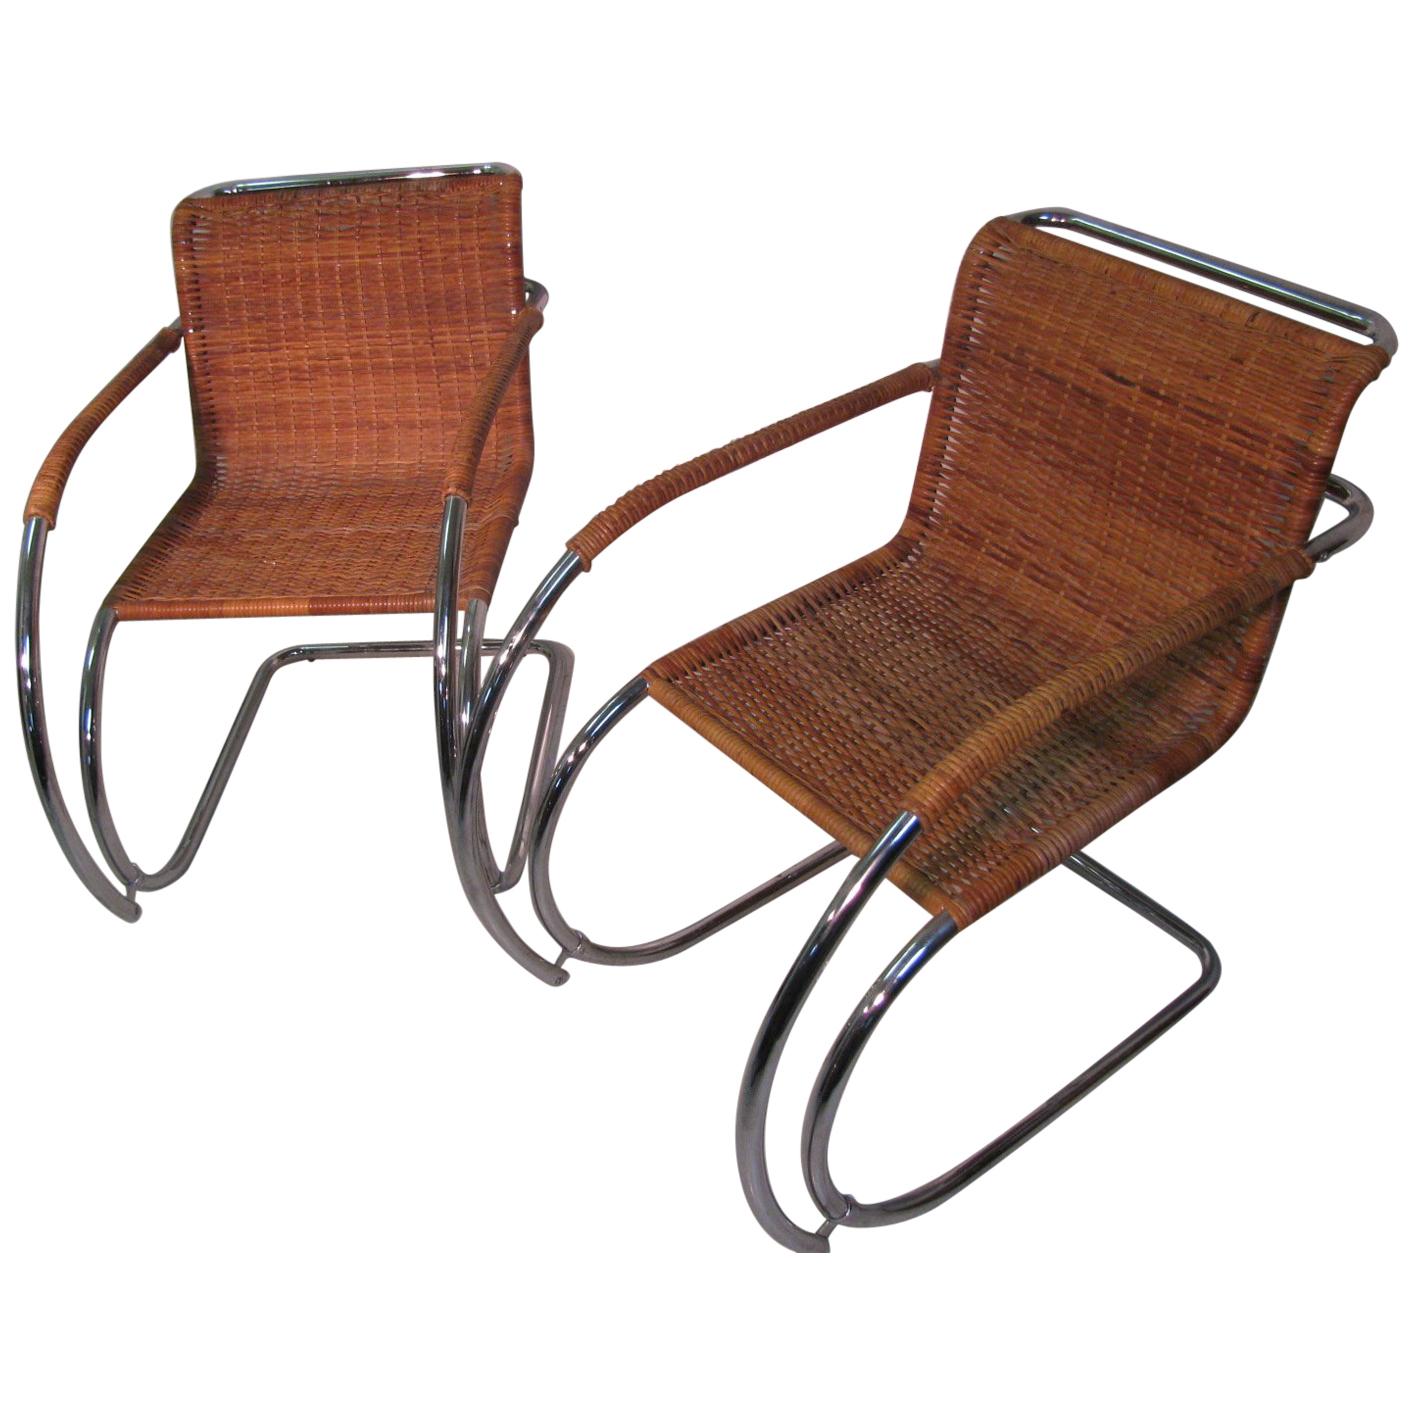 Pair of Ludwig Mies van der Rohe MR 20 Wicker Rattan Lounge Chairs